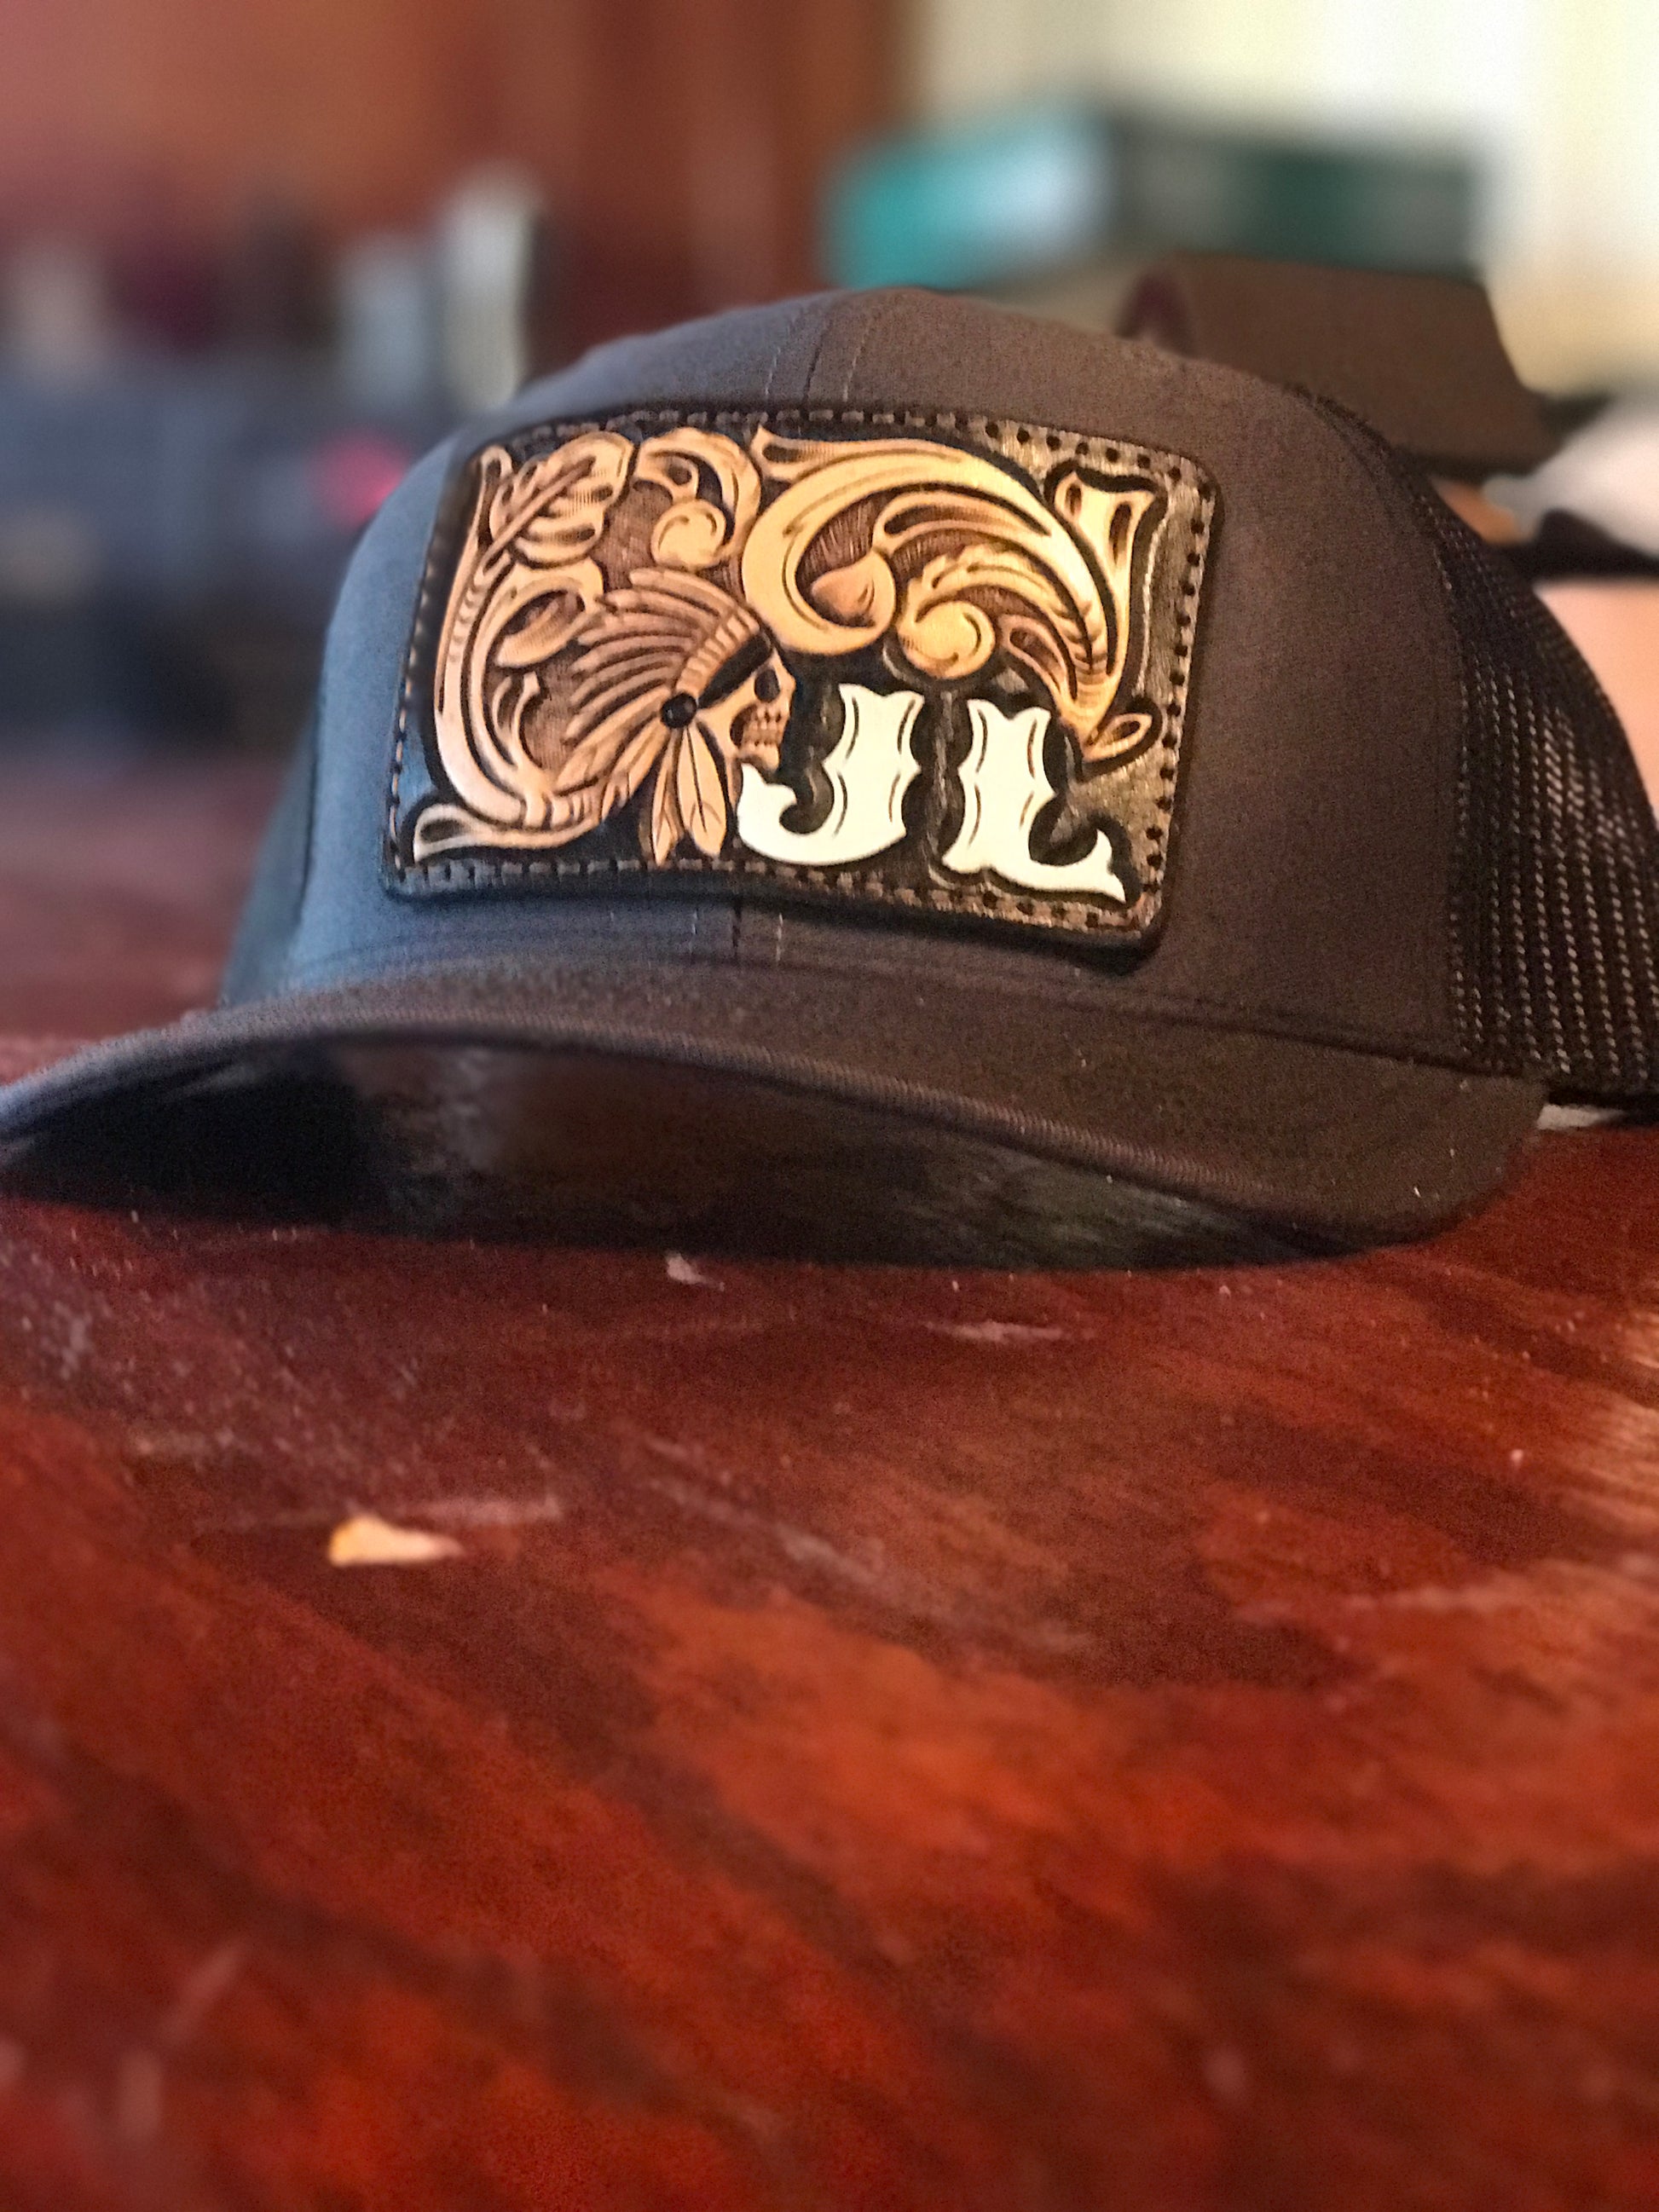 Custom Leather Patch Hat, Custom Logo Hat, Bulk Custom Leather